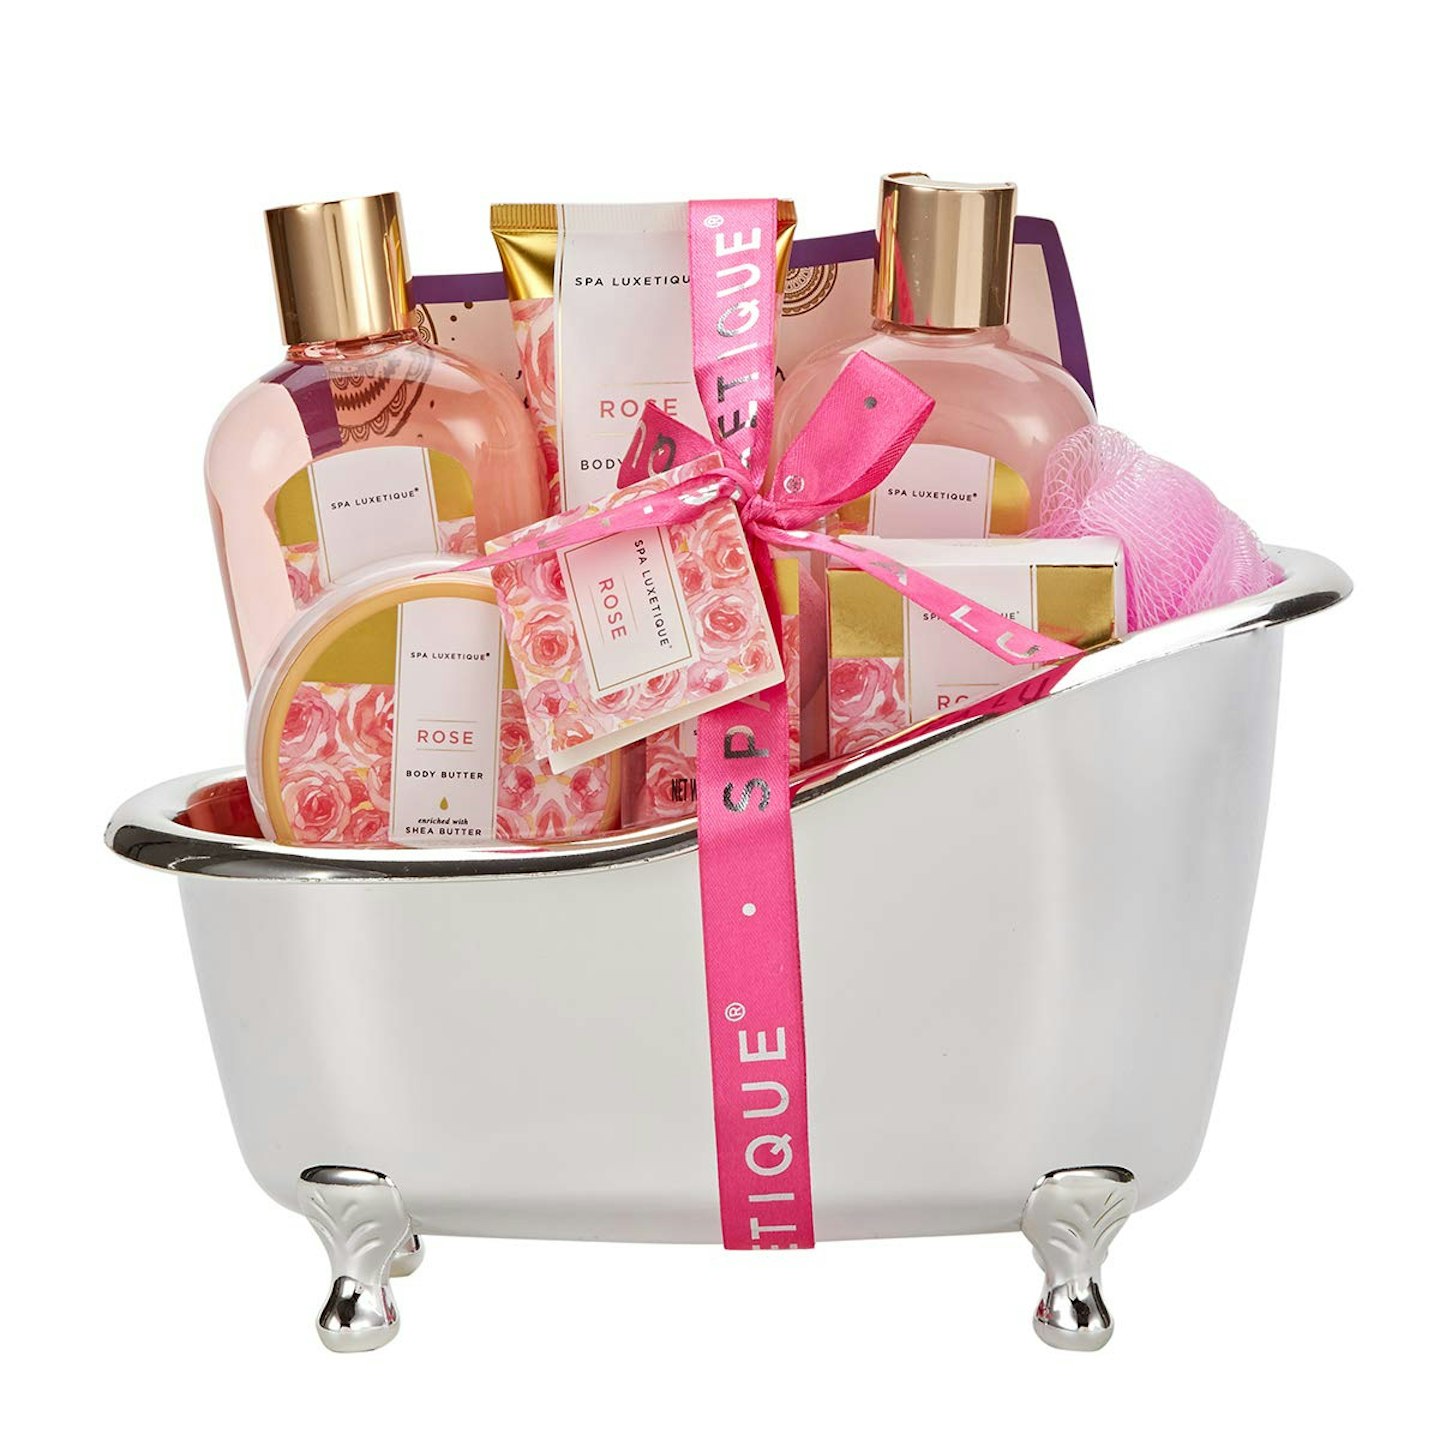 Spa luxetique rose bath gift set